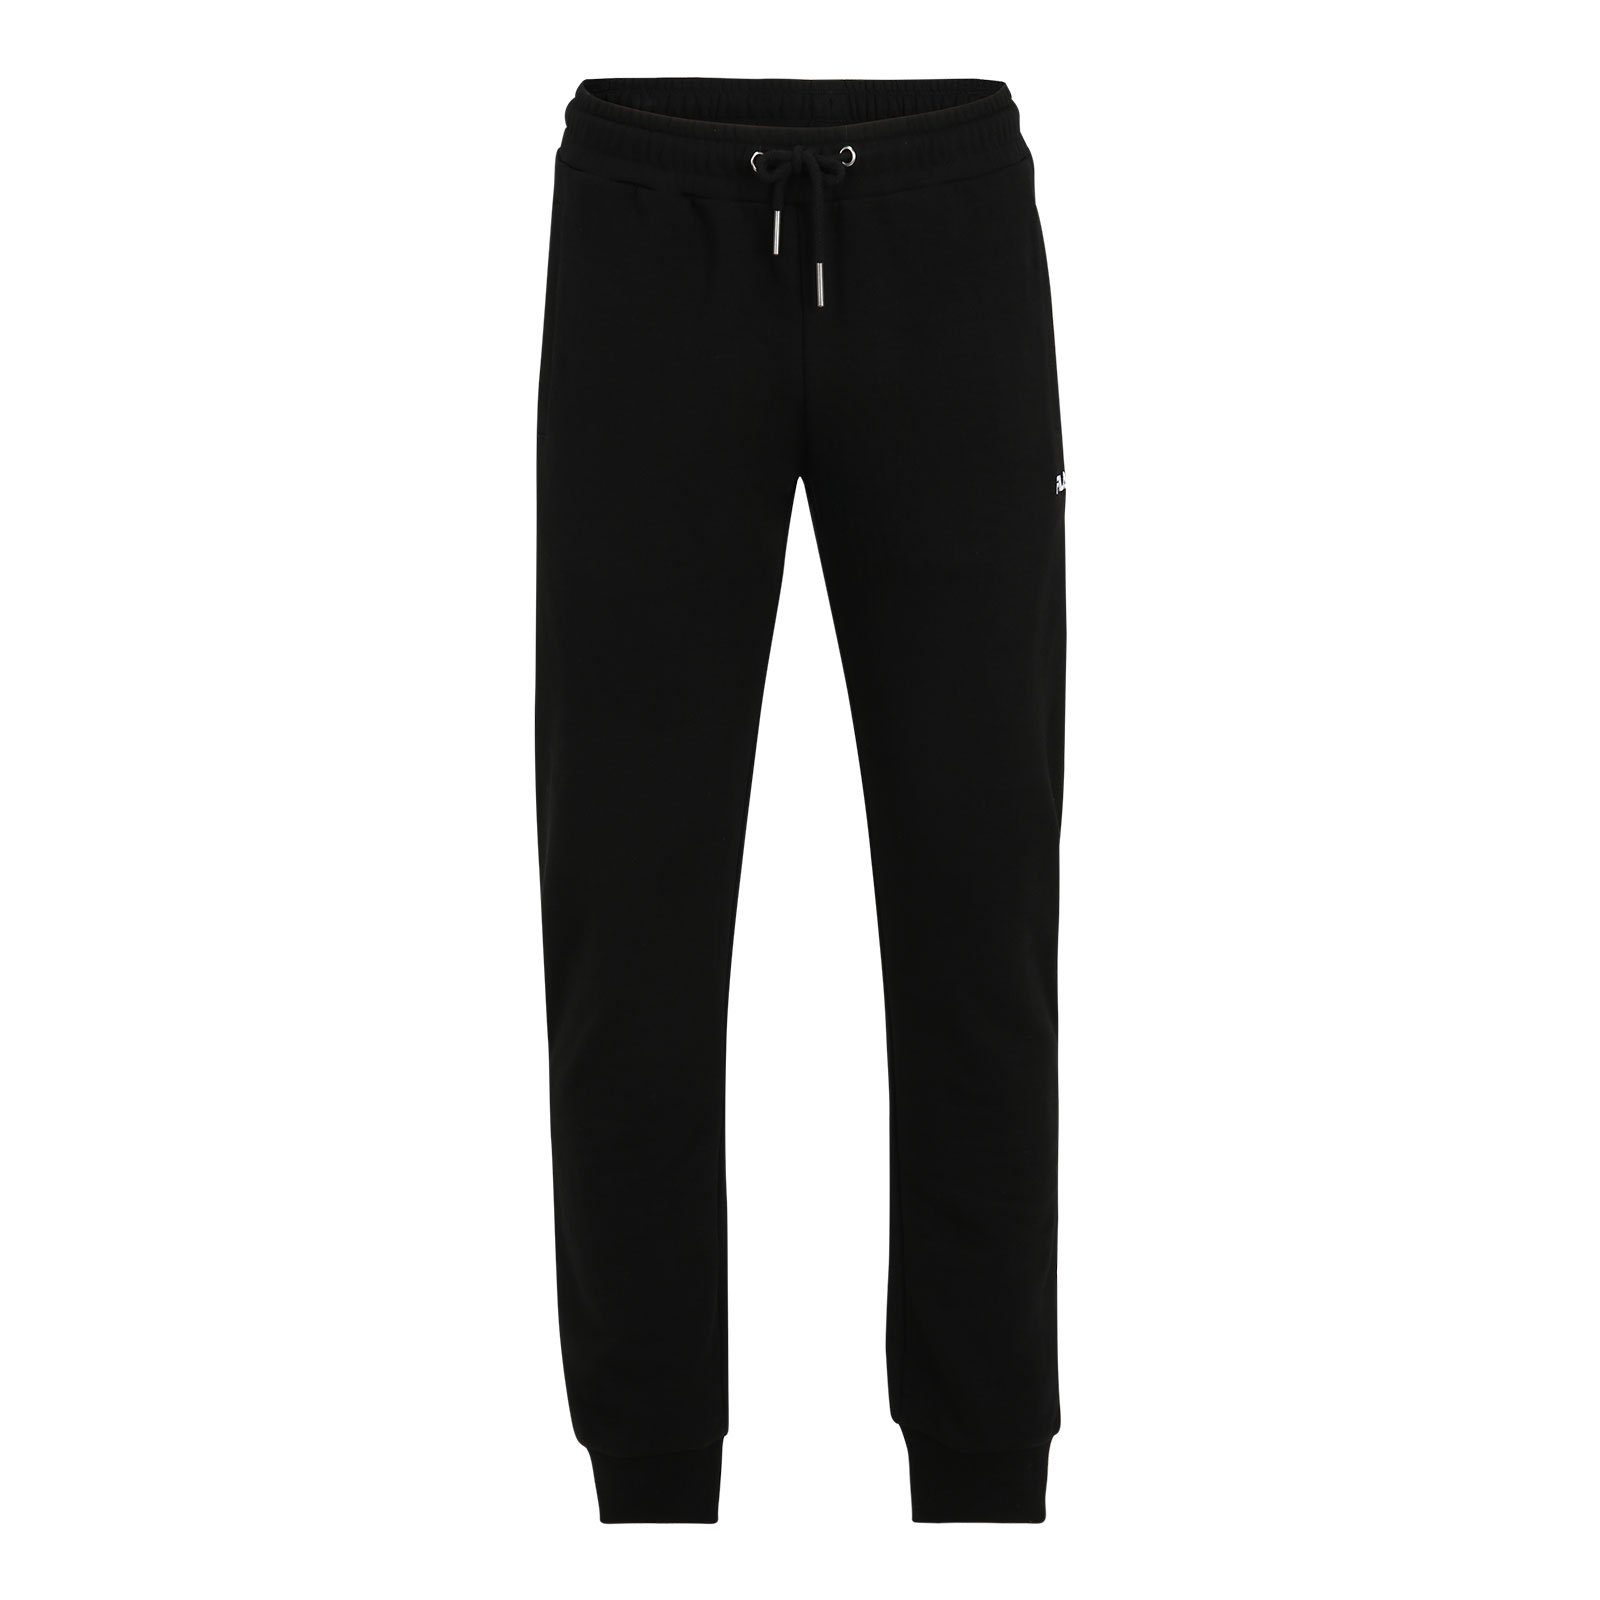 Fila Sweathose Braives Sweat Pants mit gesticktem Logo auf dem linken Oberschenkel 80010 black | Jogginghosen